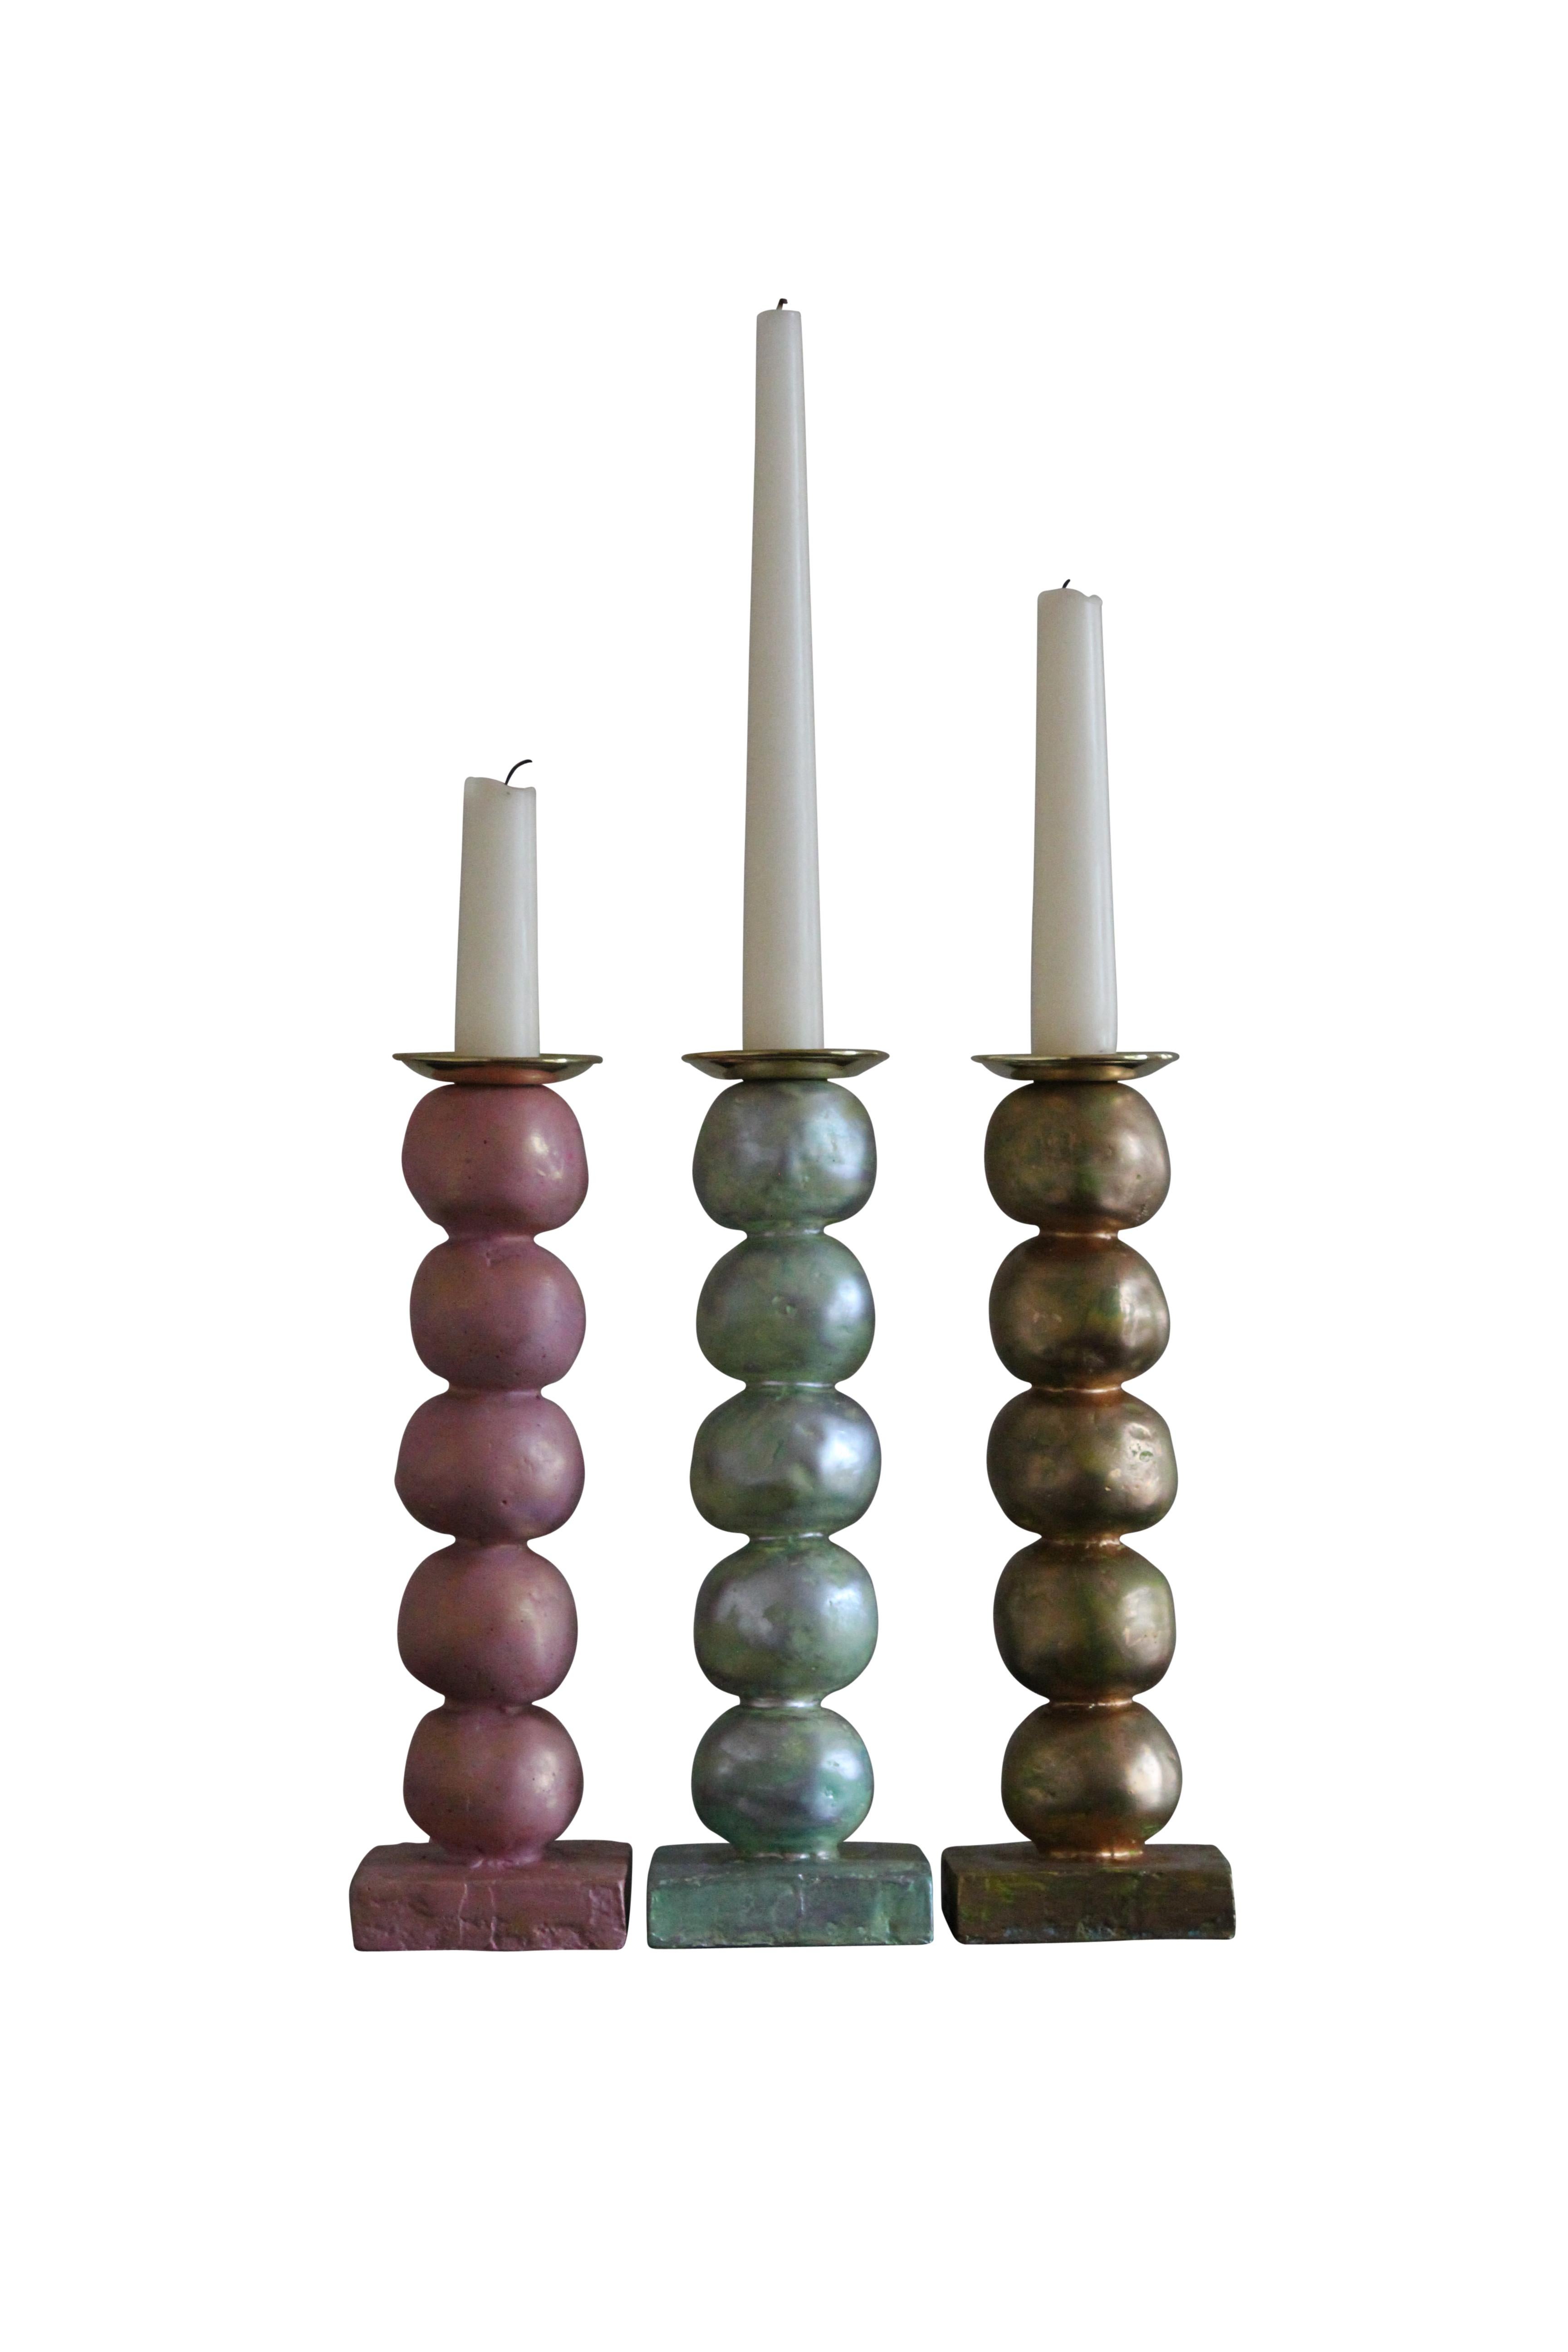 British European Contemporary White Sculptural Candlestick Set of Three